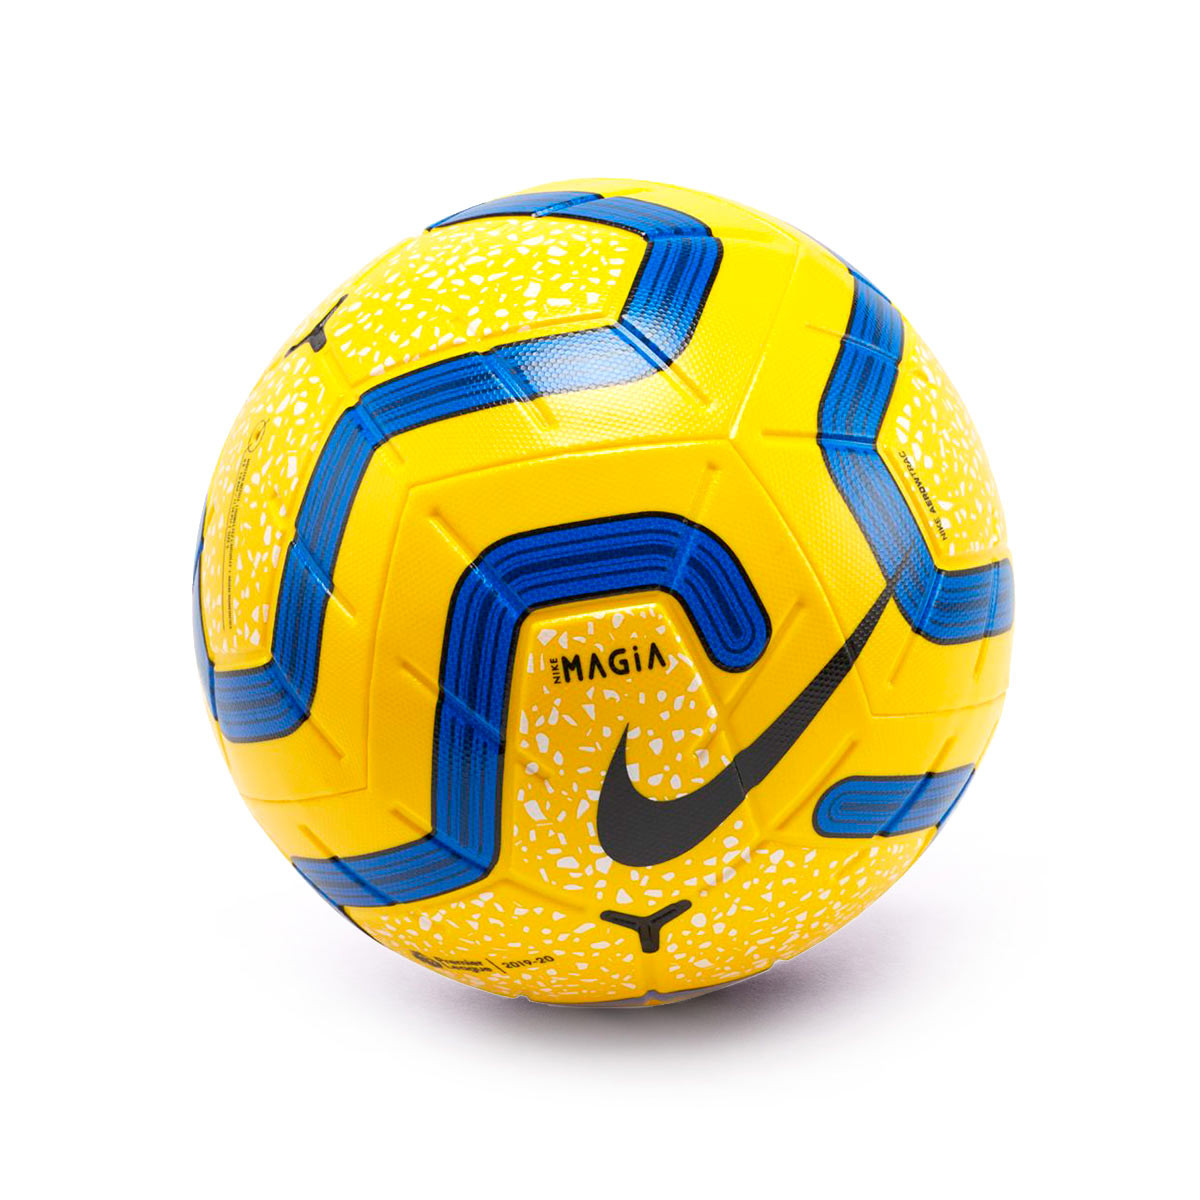 Ball Nike Premier League Magia 2019 